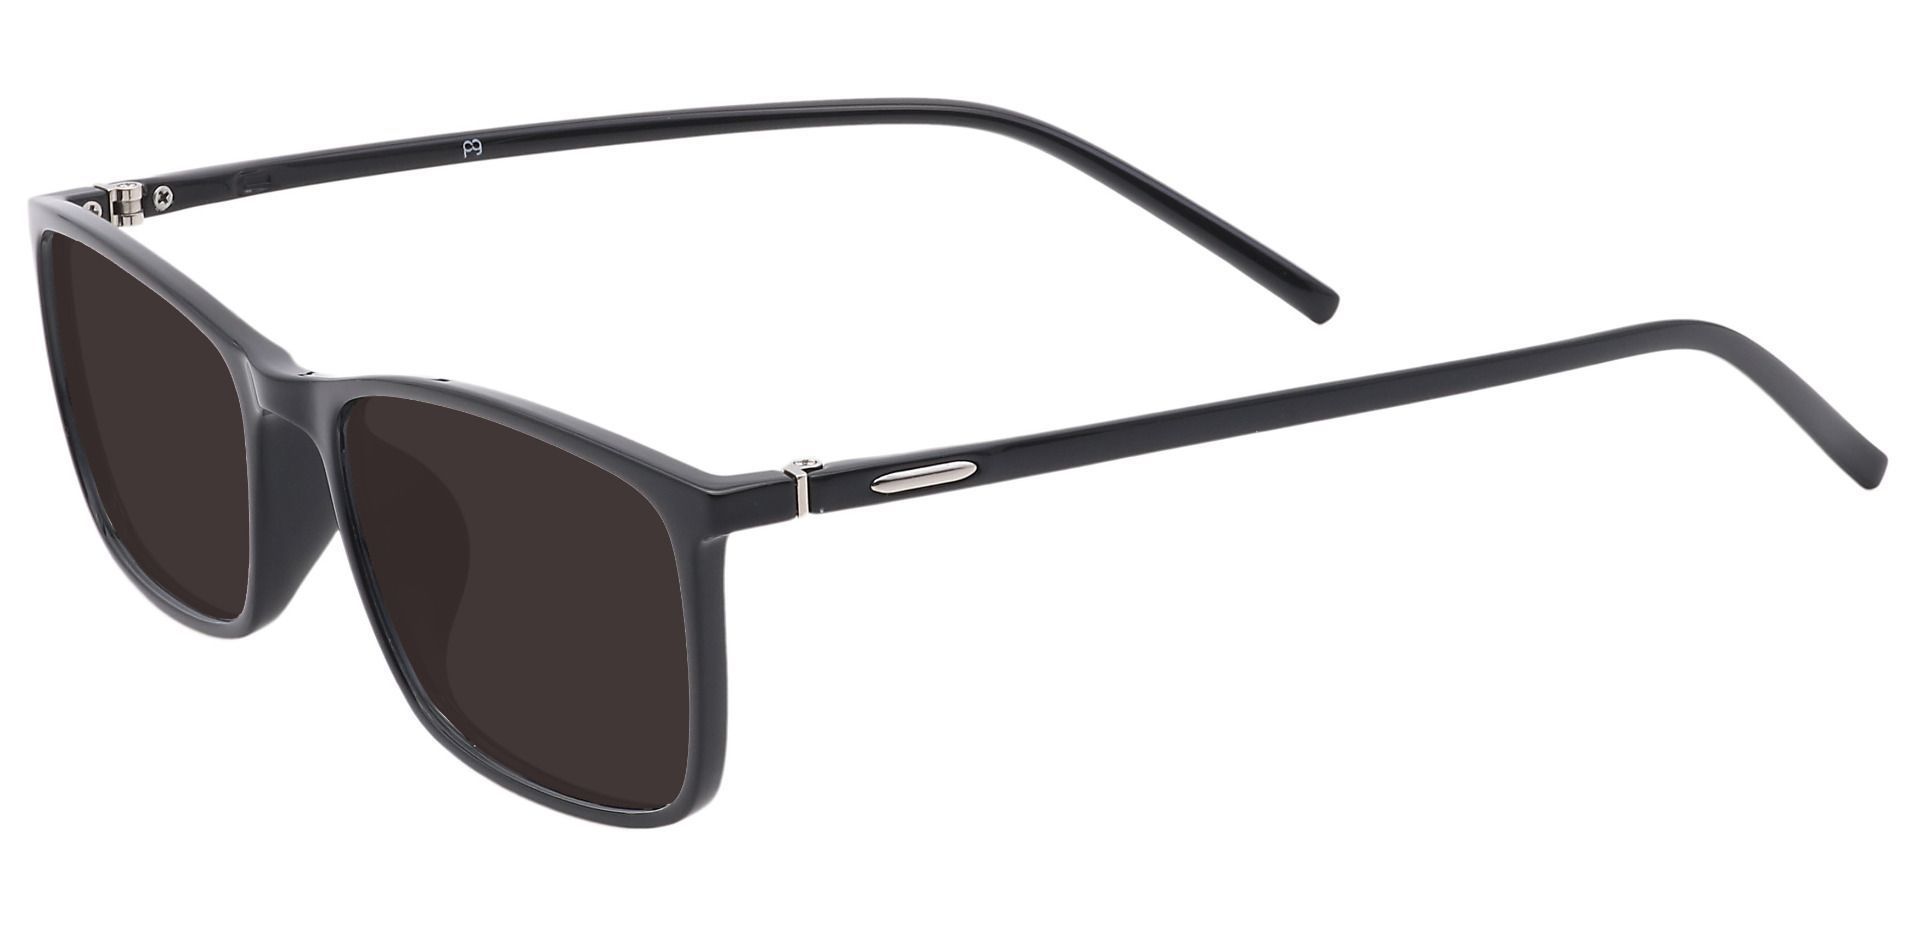 Fuji Rectangle Prescription Sunglasses - Black Frame With Gray Lenses